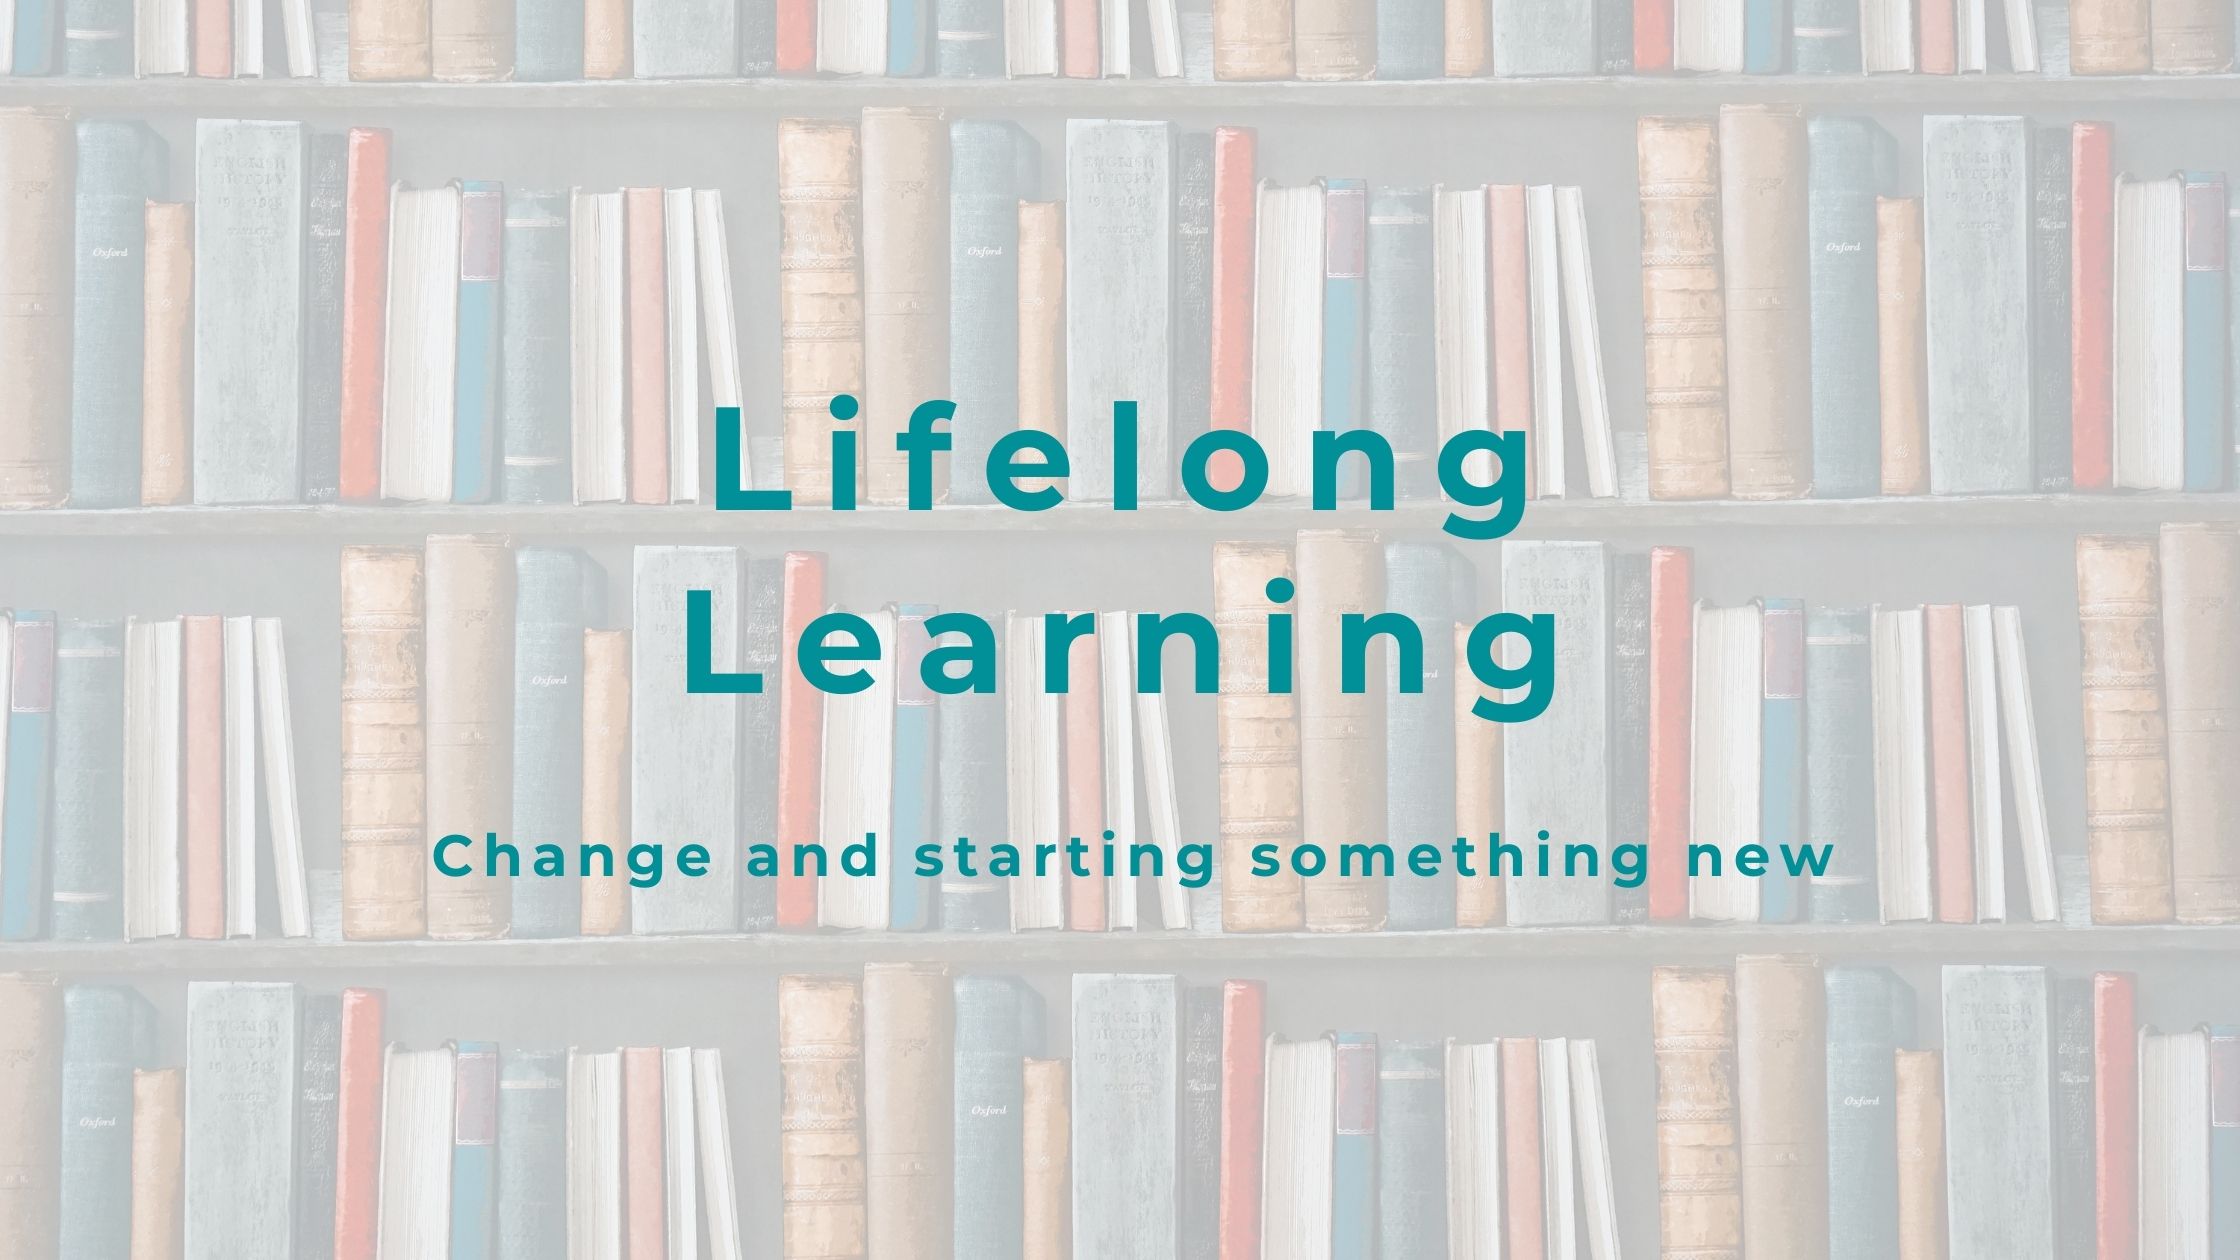 Lifelong learning